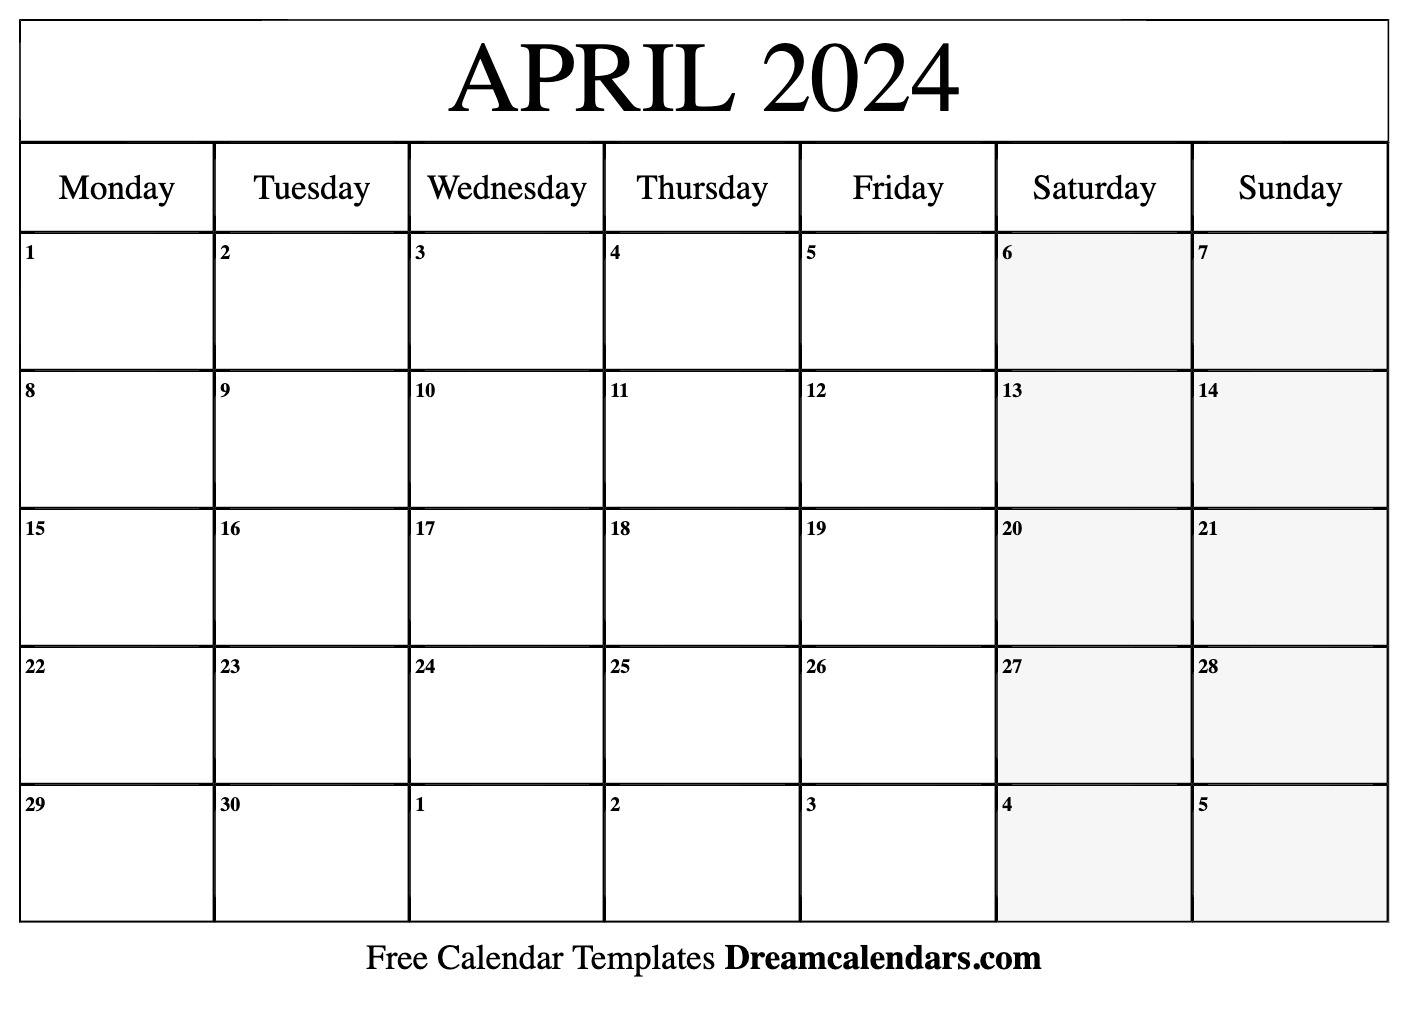 April 2024 Calendar | Free Blank Printable With Holidays for Blank Printable April 2024 Calendar